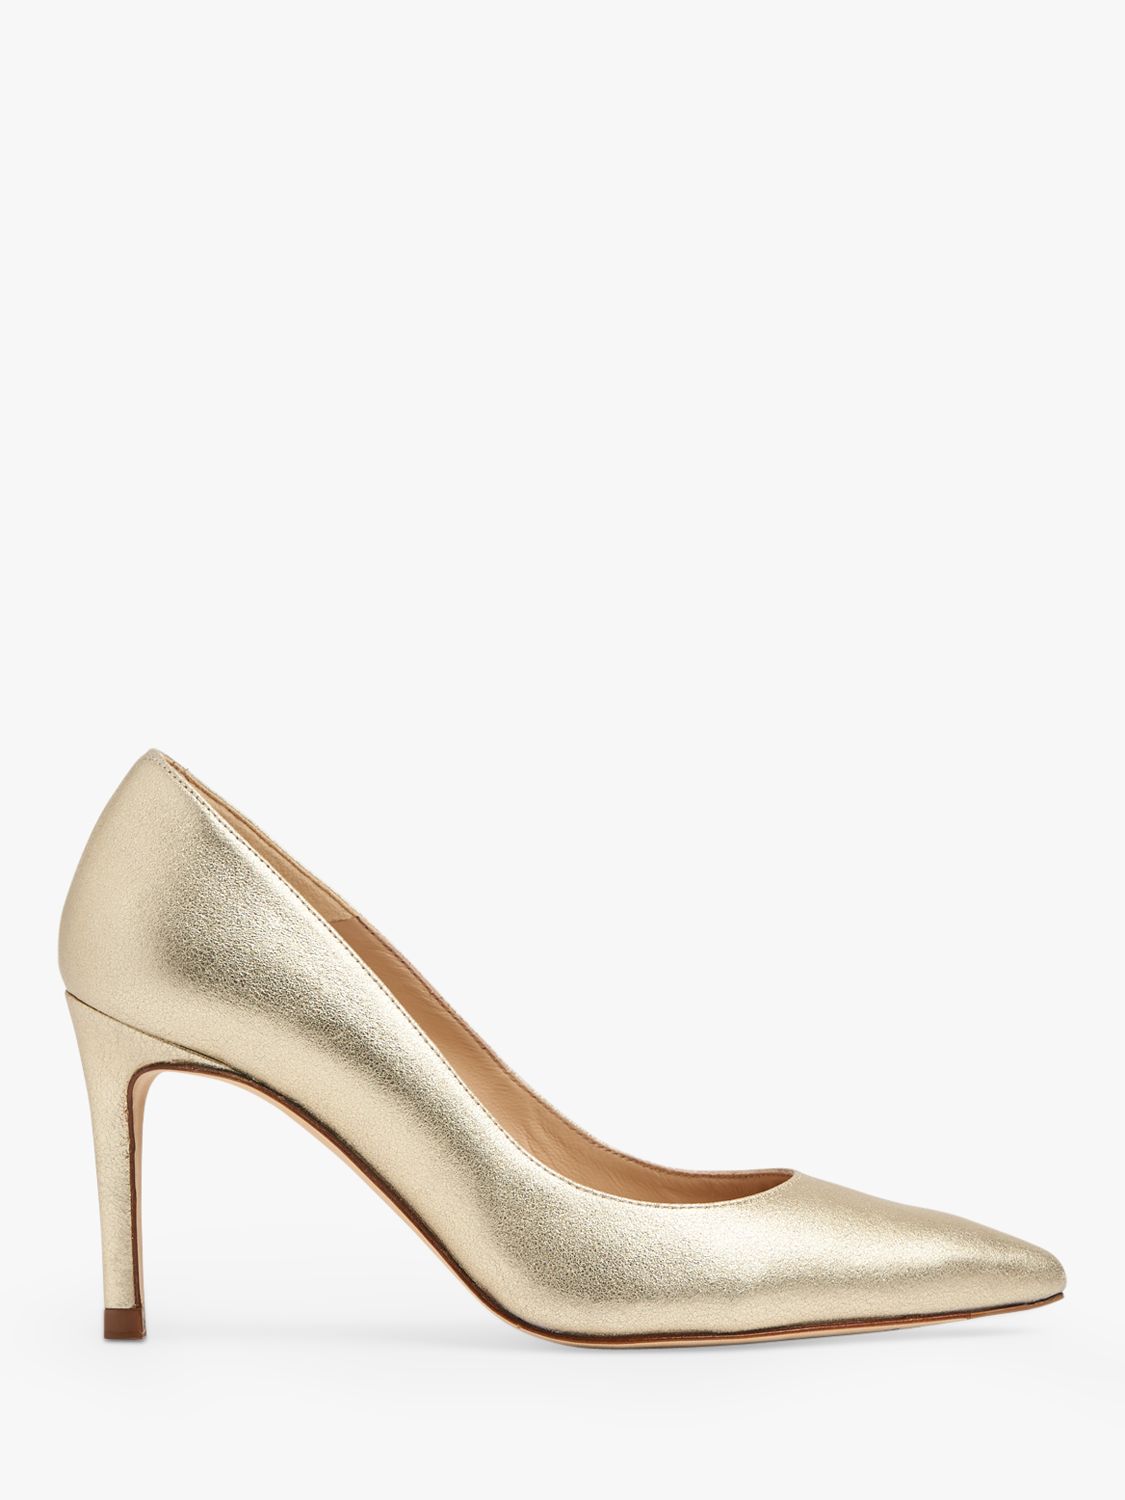 L.K.Bennett Floret Pointed Toe Court Shoes, Gold at John Lewis & Partners